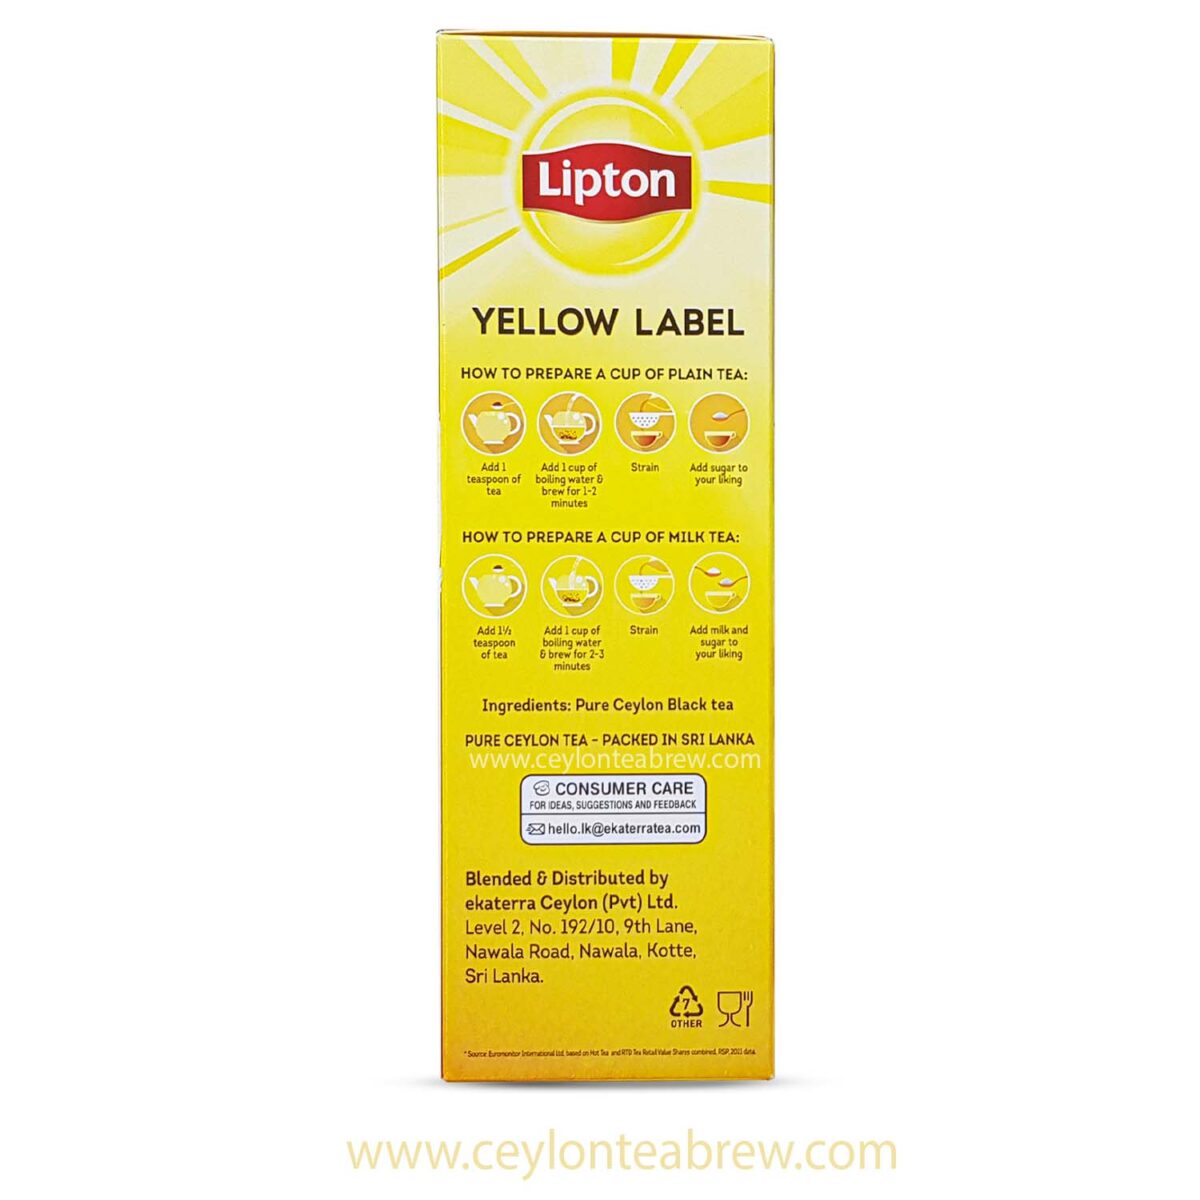 Ceylon Lipton yellow label black tea